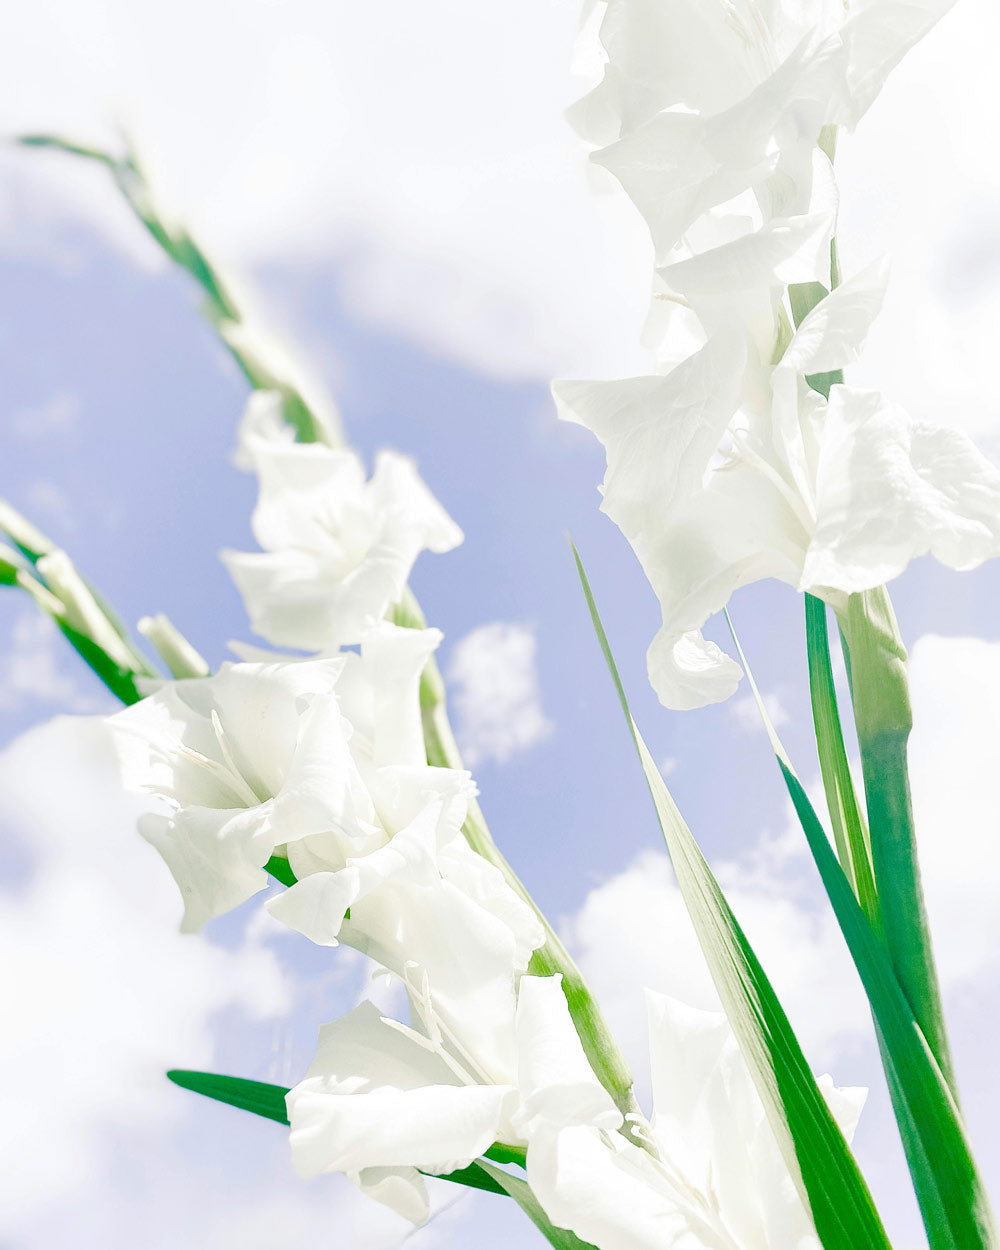 Gladiolus Flower Facts Information Guide